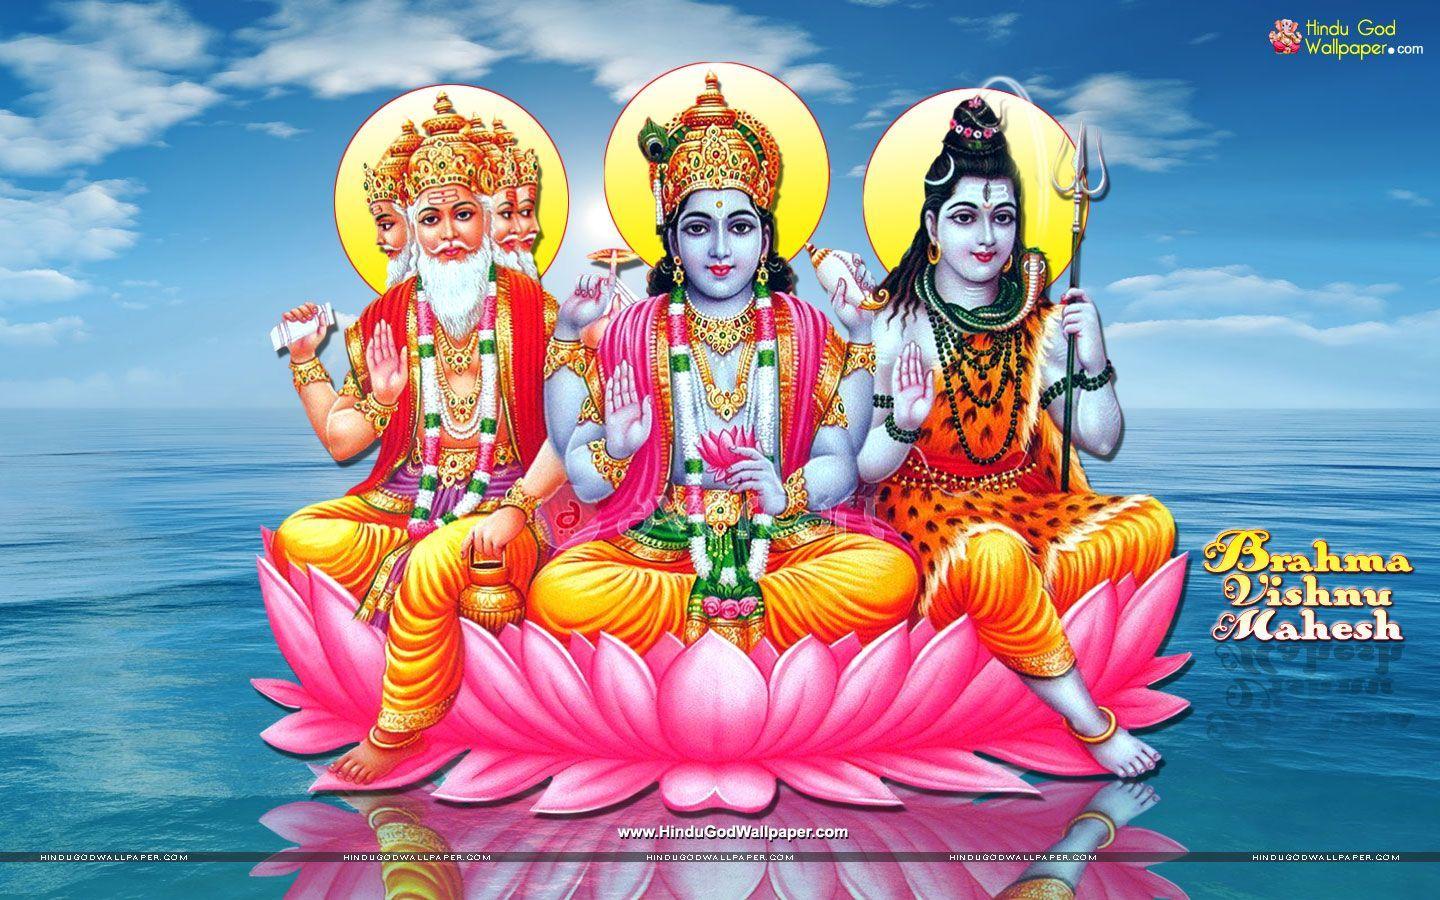 Brahma Vishnu Mahesh HD Wallpaper Free Download. Hindu gods, Vishnu, Brahma